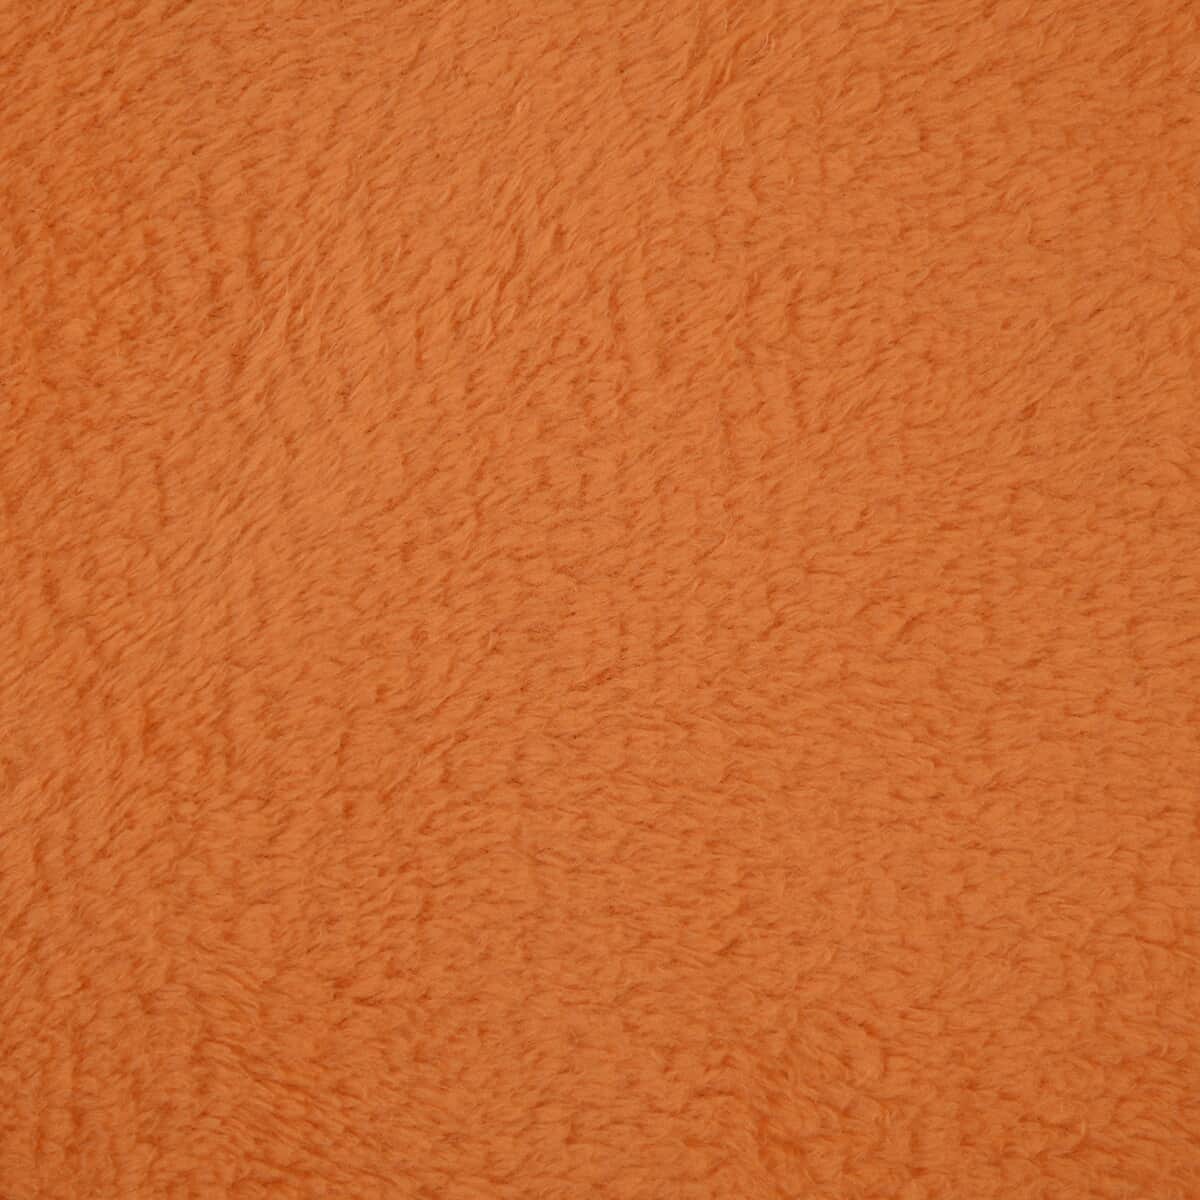 Homesmart Orange Solid Coral Fleece Warmth and Soft Blanket image number 2